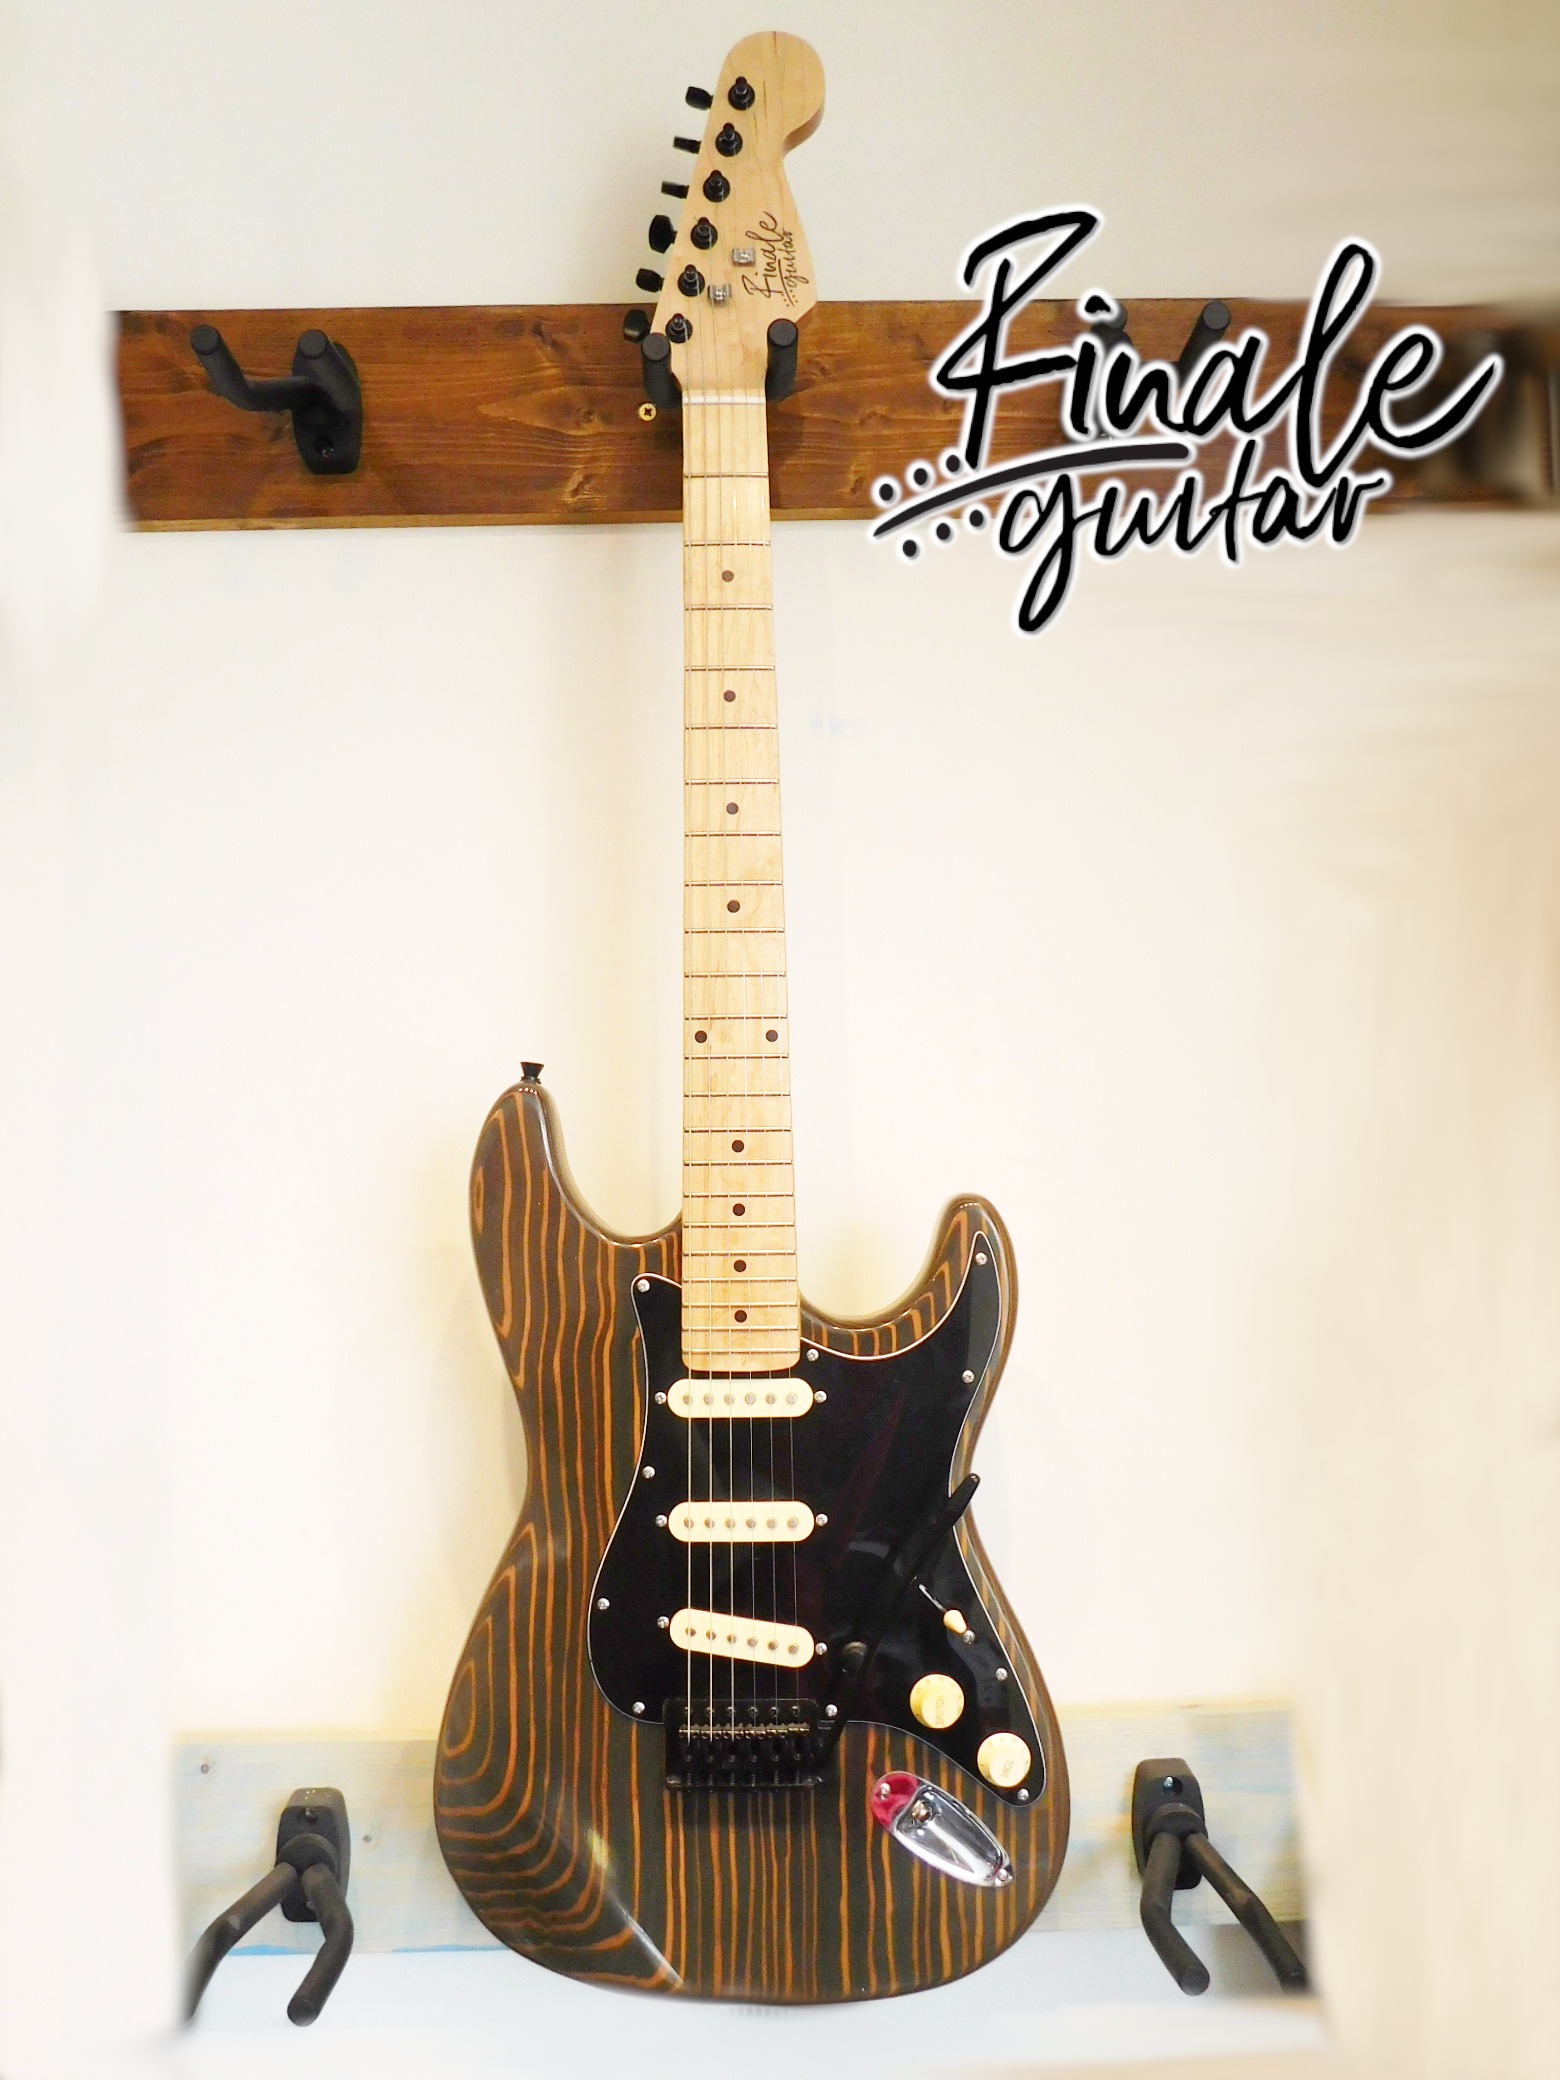 Finale Guitar Zebracaster for sale in our Sheffield guitar shop